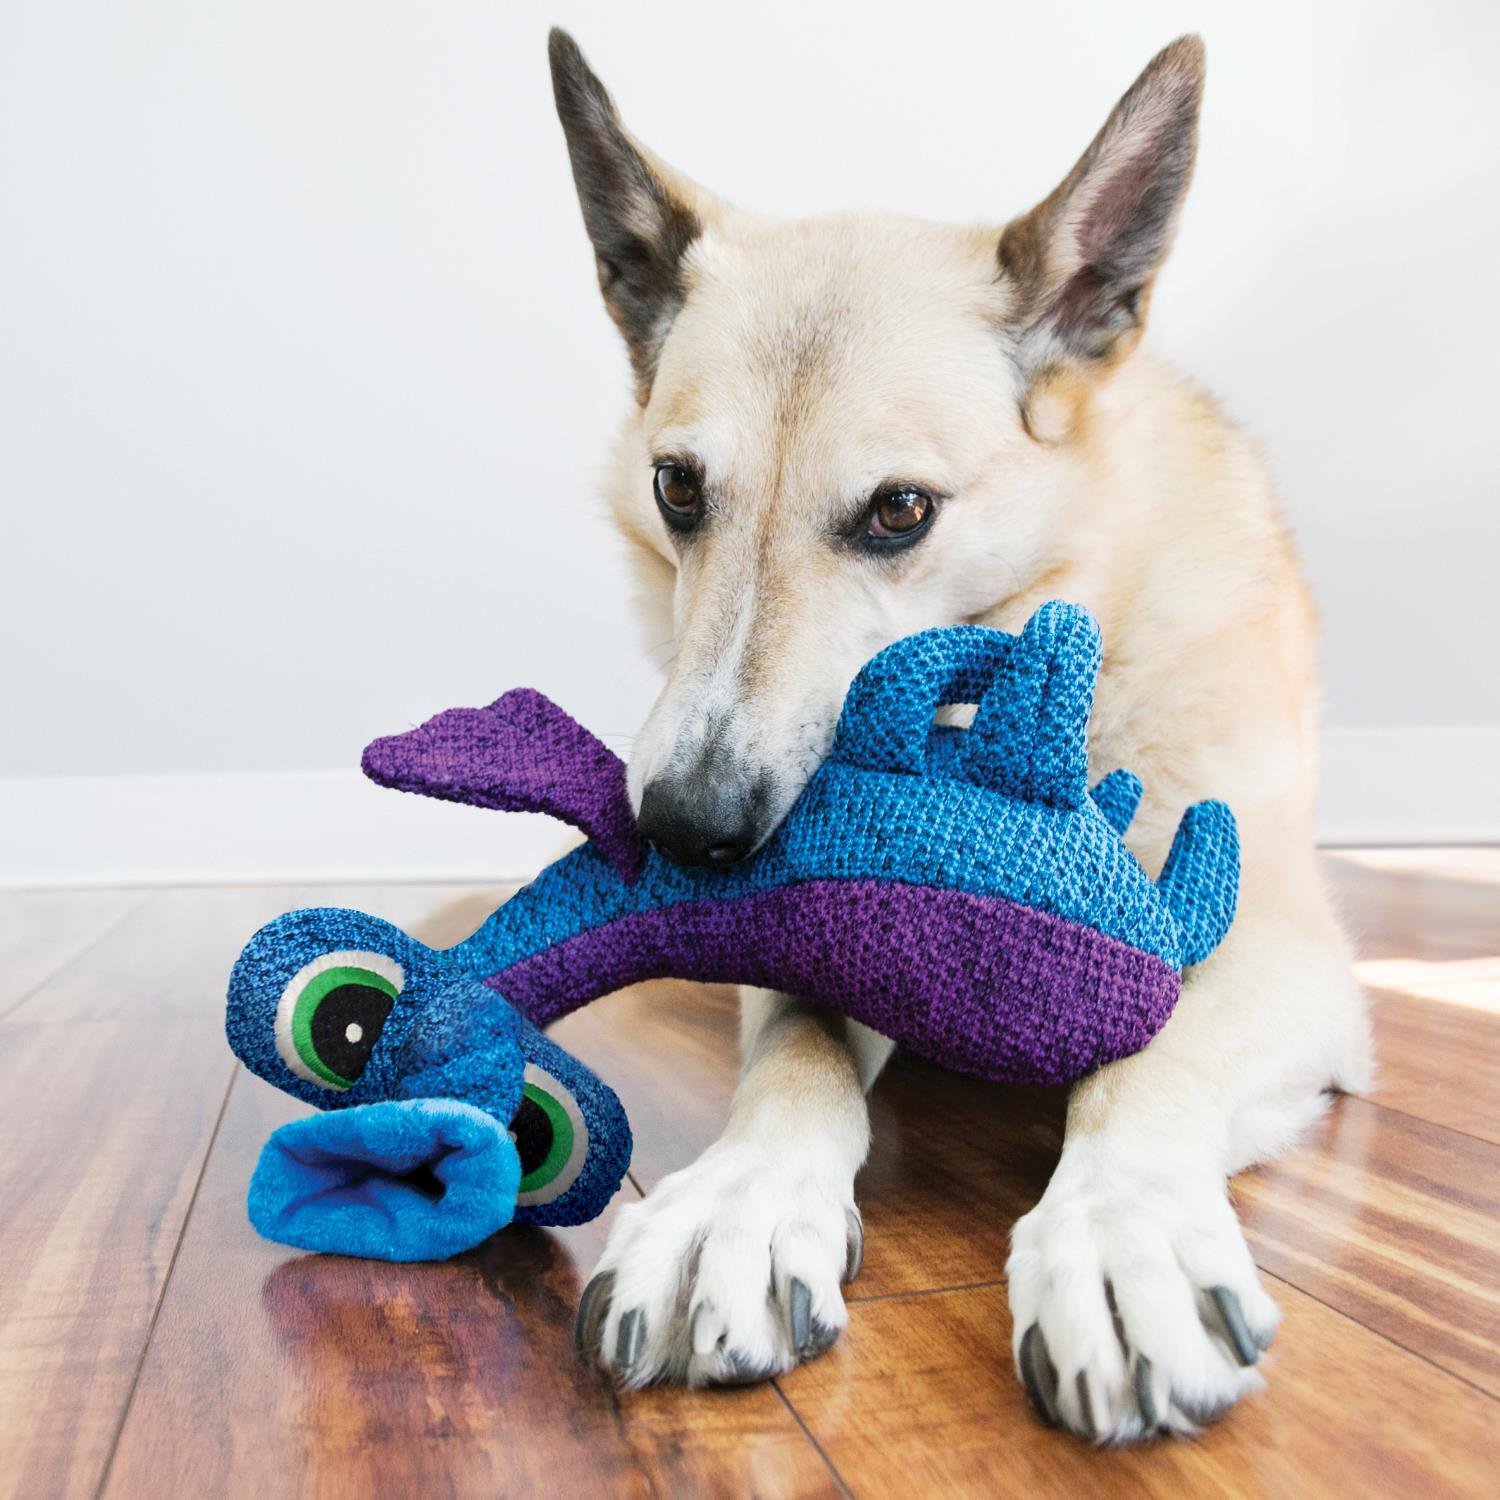 KONG Woozles Plush Squeaker Alien Dog Toy - Blue image 0